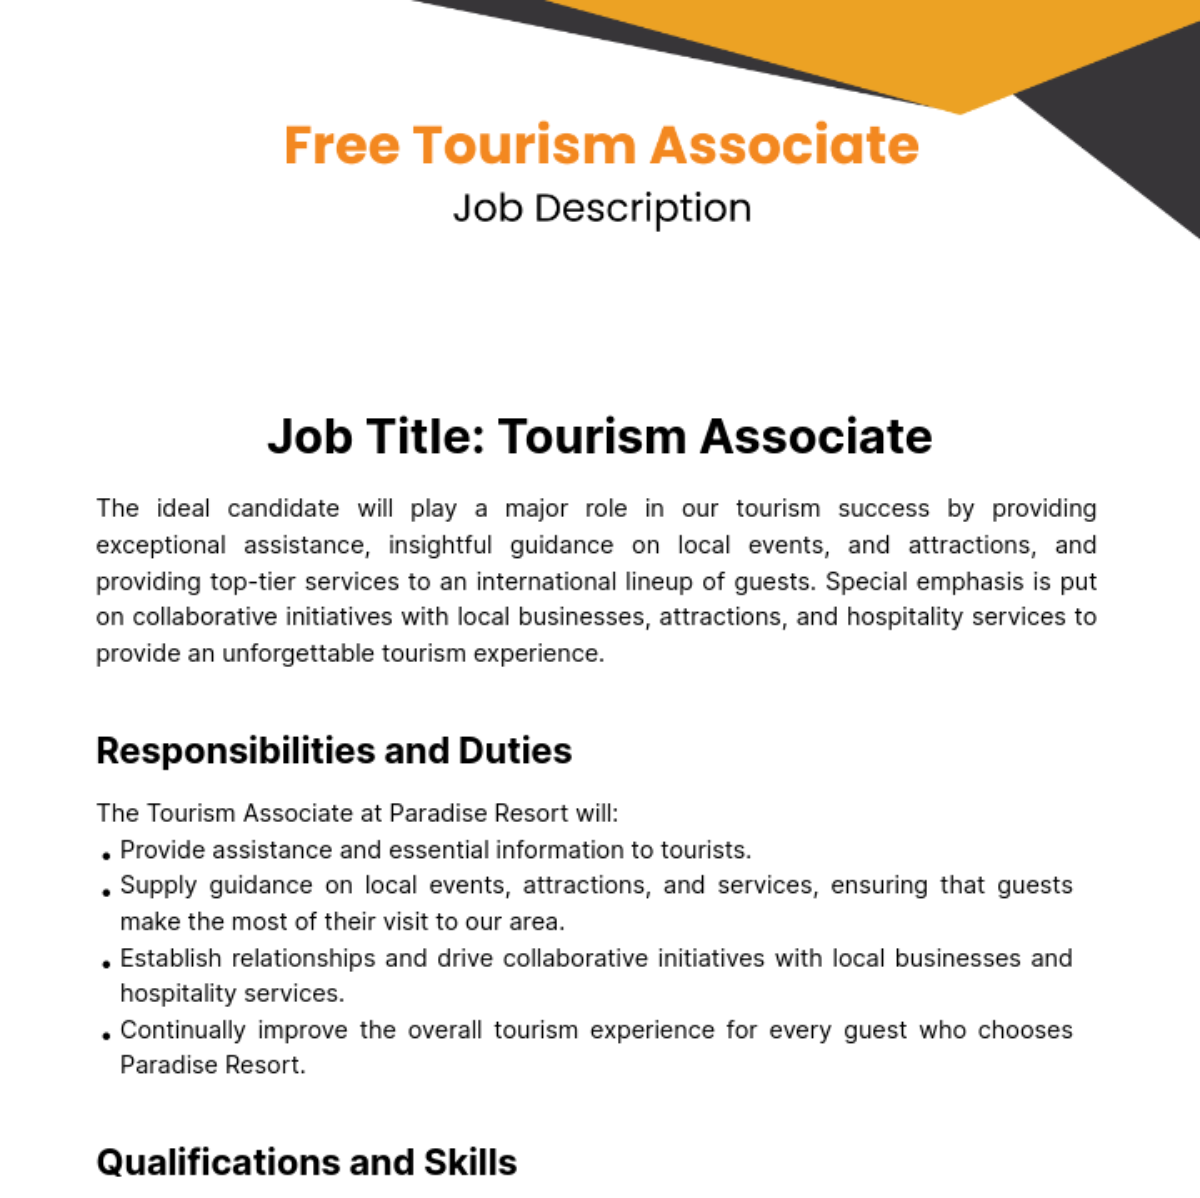 Free Tourism Associate Job Description Template